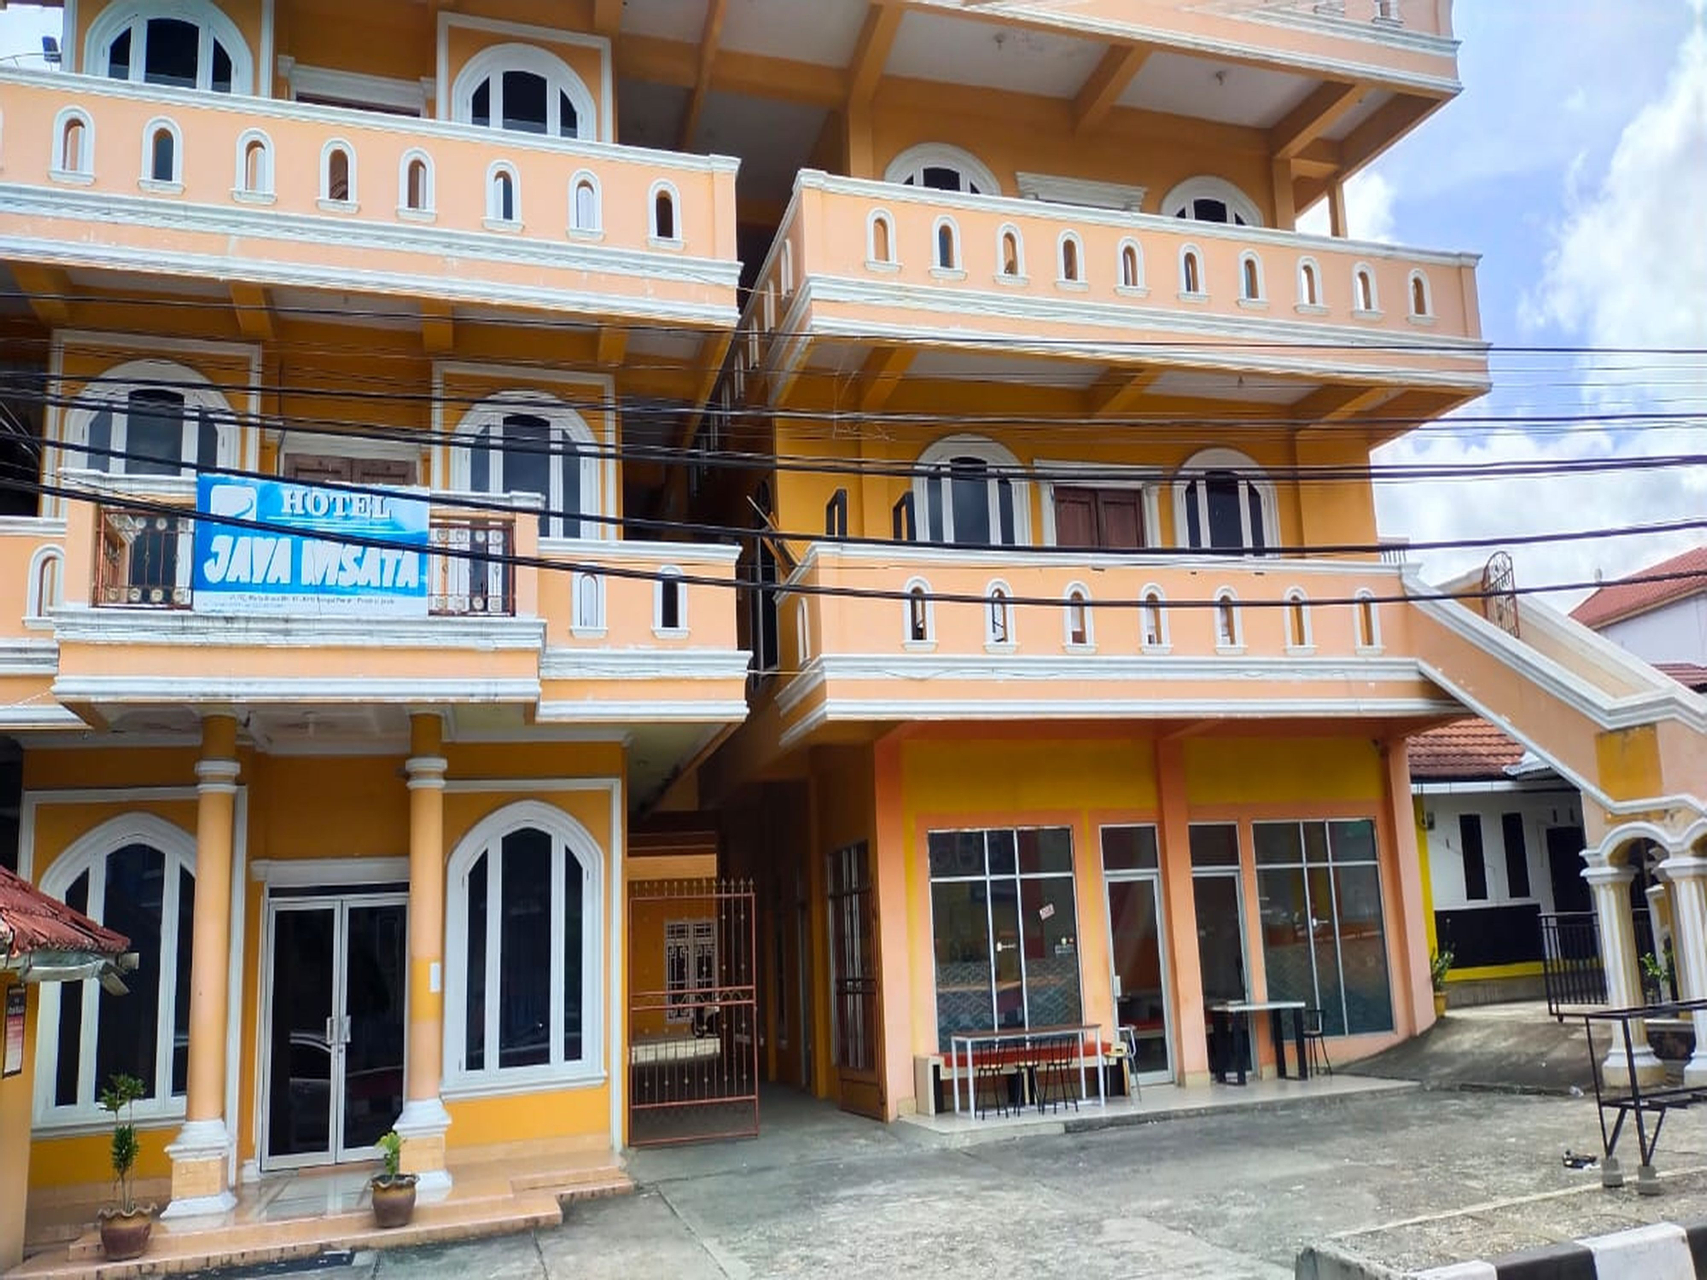 Hotel Jaya Wisata 1, Kerinci